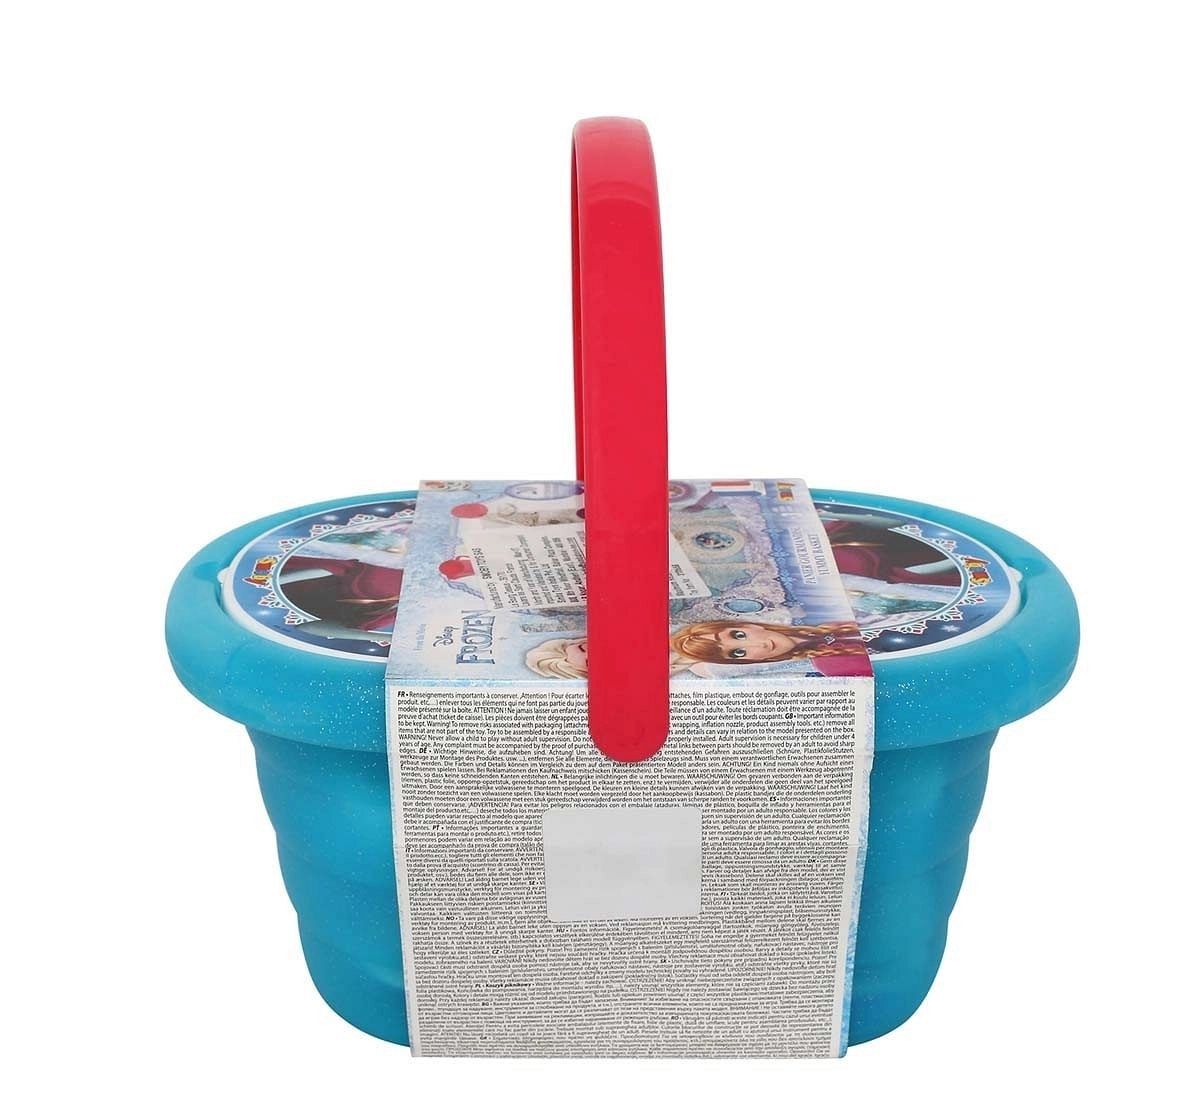 Disney Blue Frozen Picnic Basket Supermarket & Food Playsets for age 3Y+ 